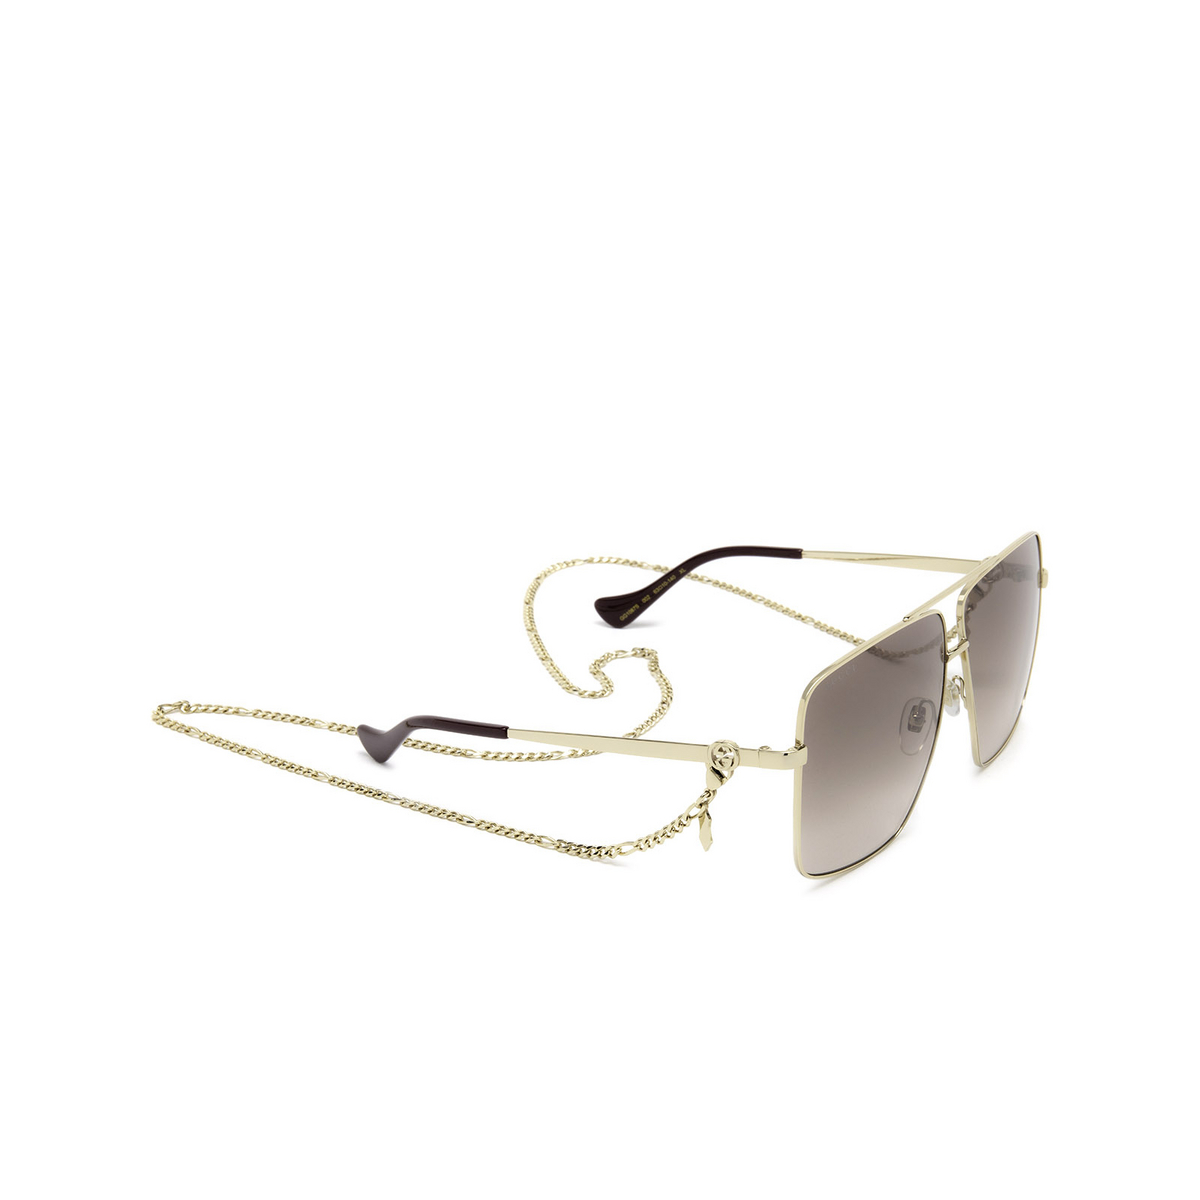 Gucci® Irregular Sunglasses: GG1087S color Gold 002 - three-quarters view.